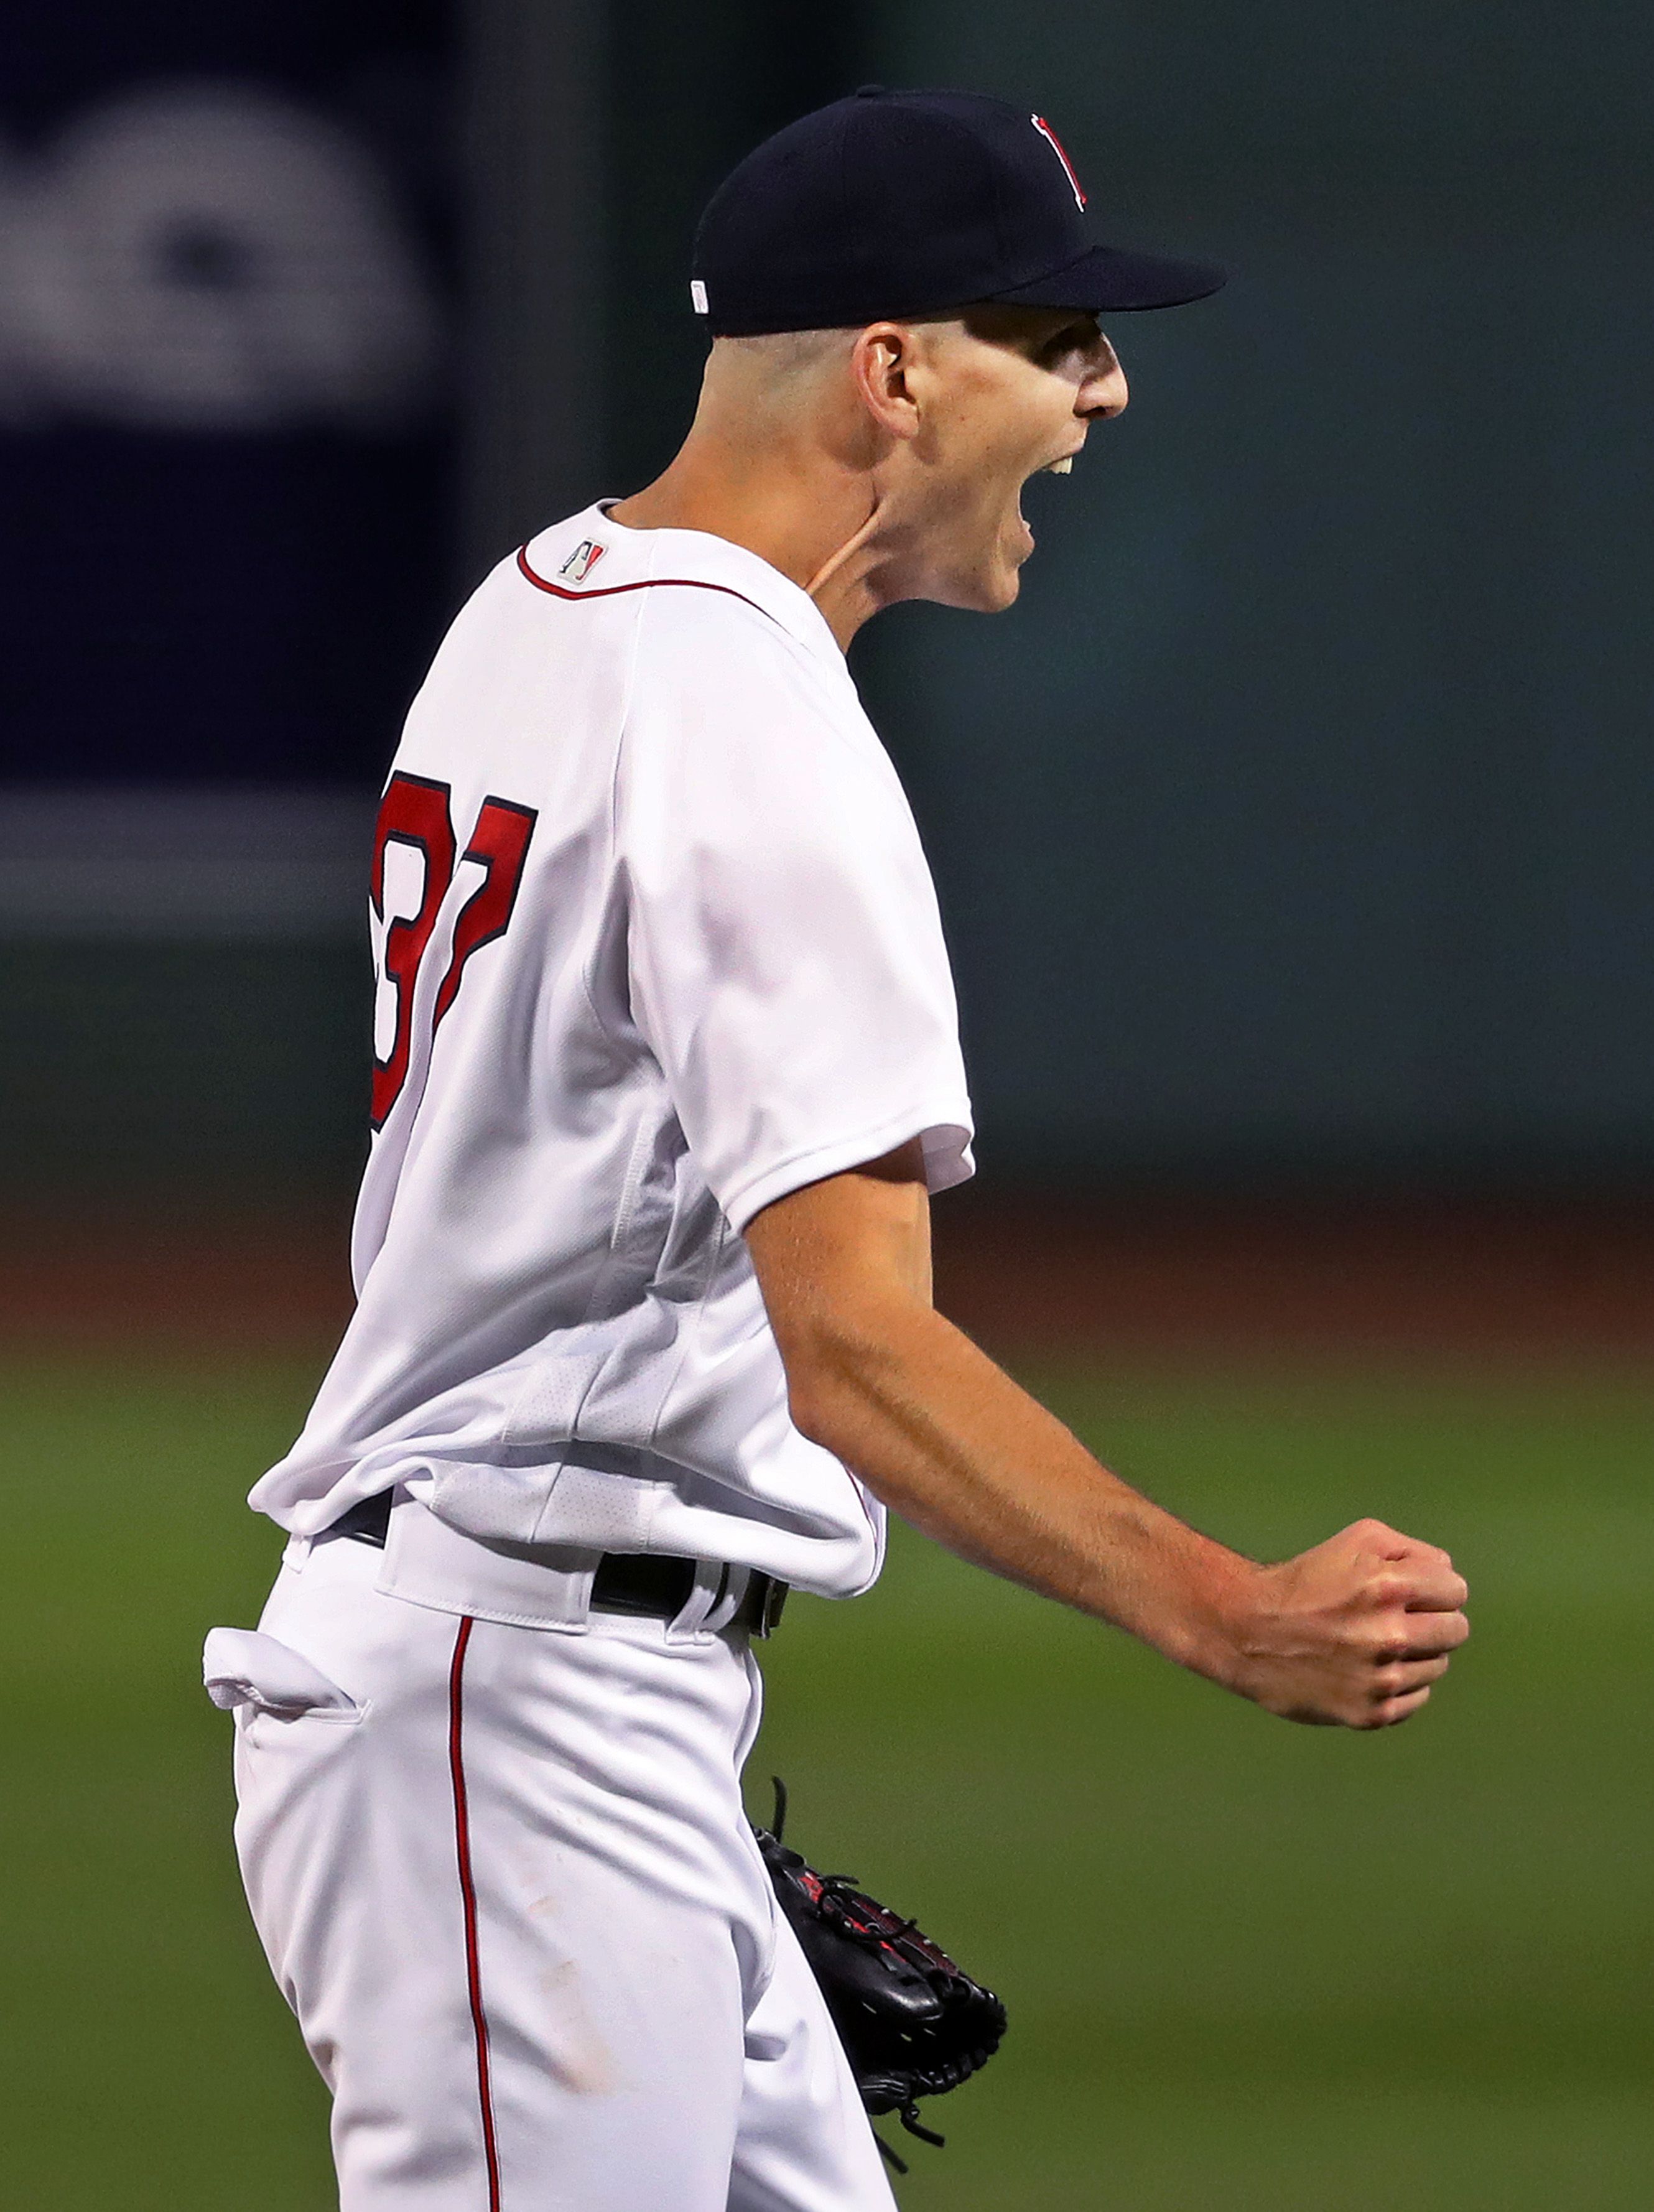 Boston Red Sox 2021 Season Preview: Nick Pivetta has locked down